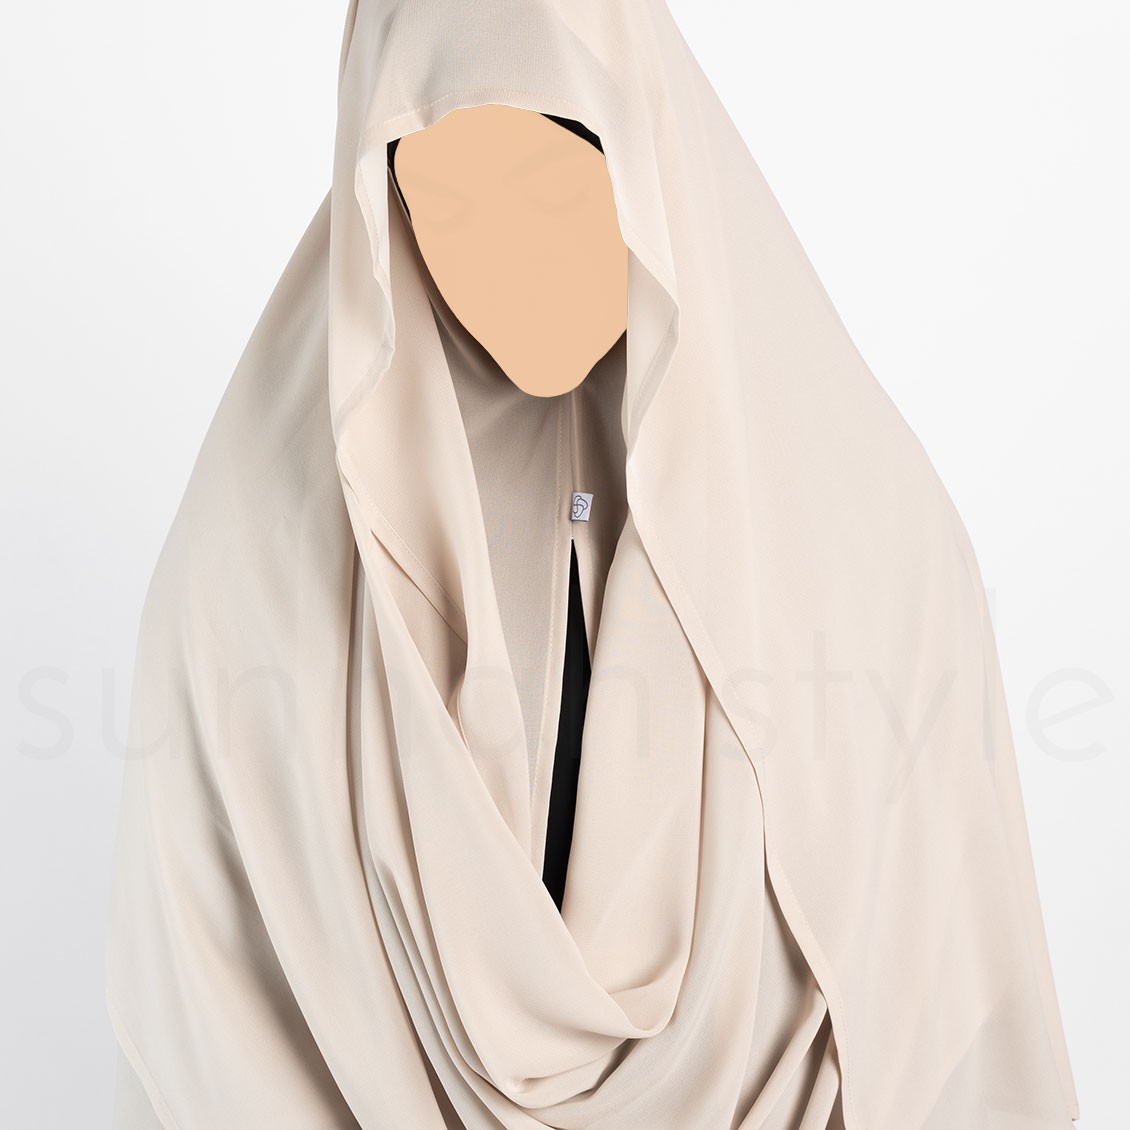 Sunnah Style Hooded Wrap Hijab Sahara